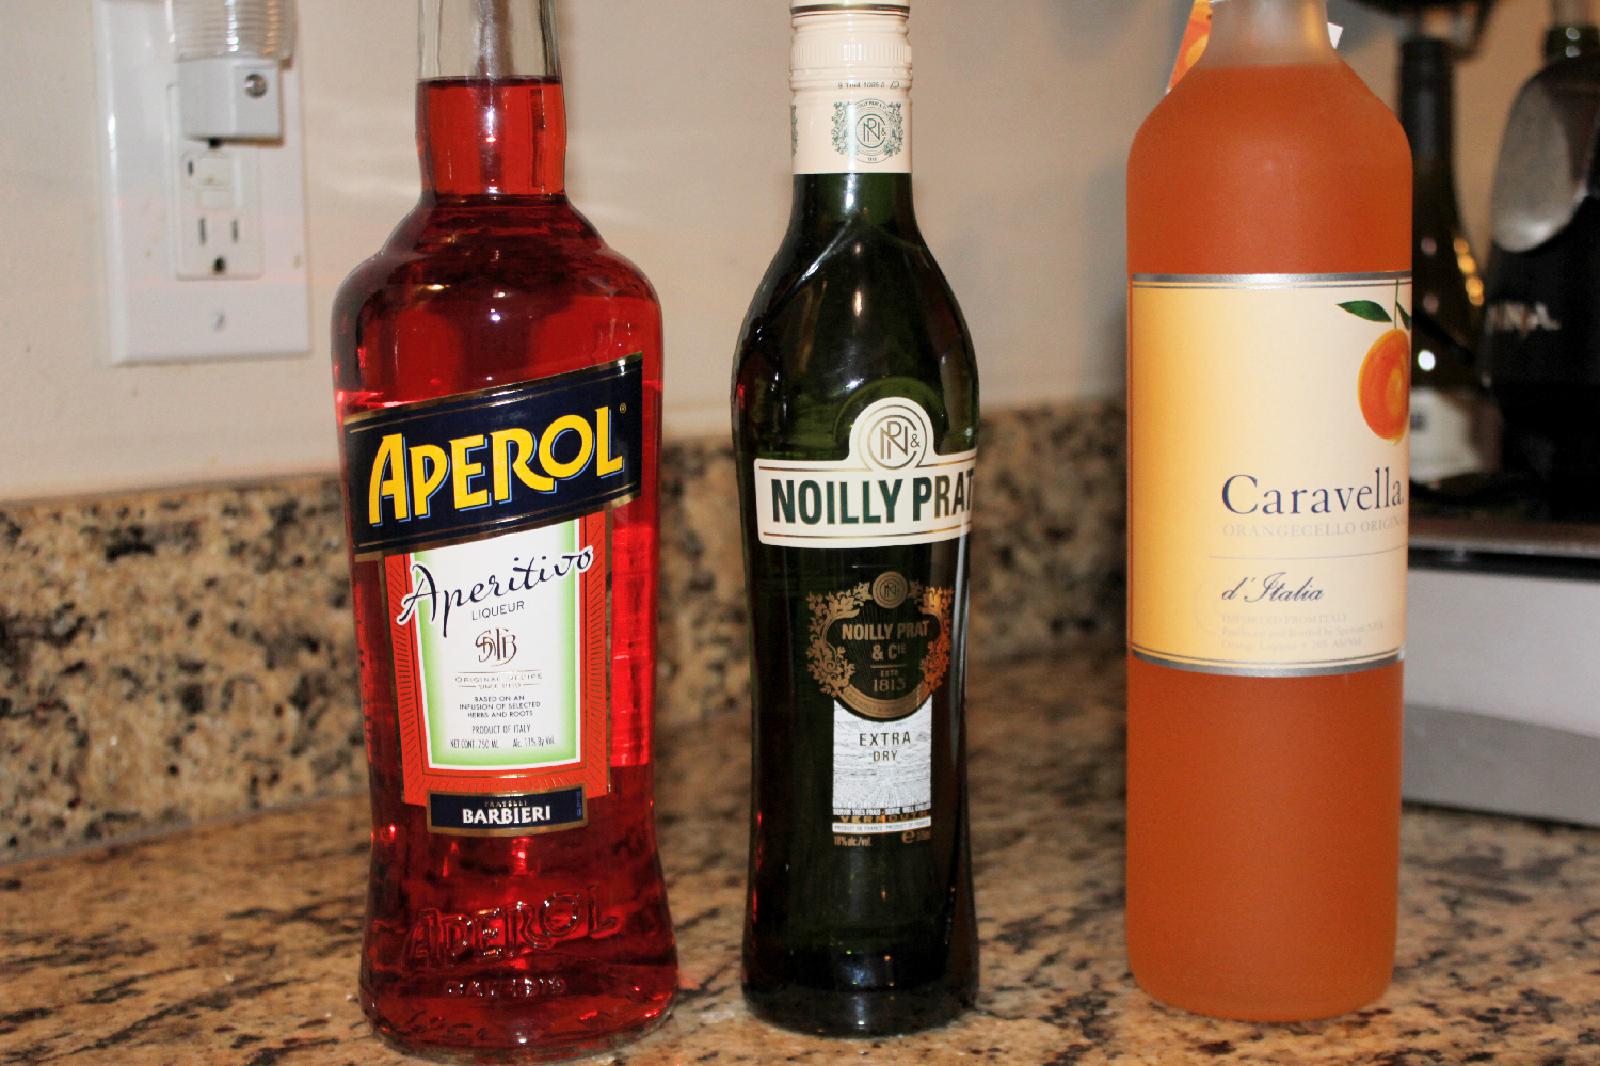 Bottles of Aperol, vermouth, and orangecello on a counter